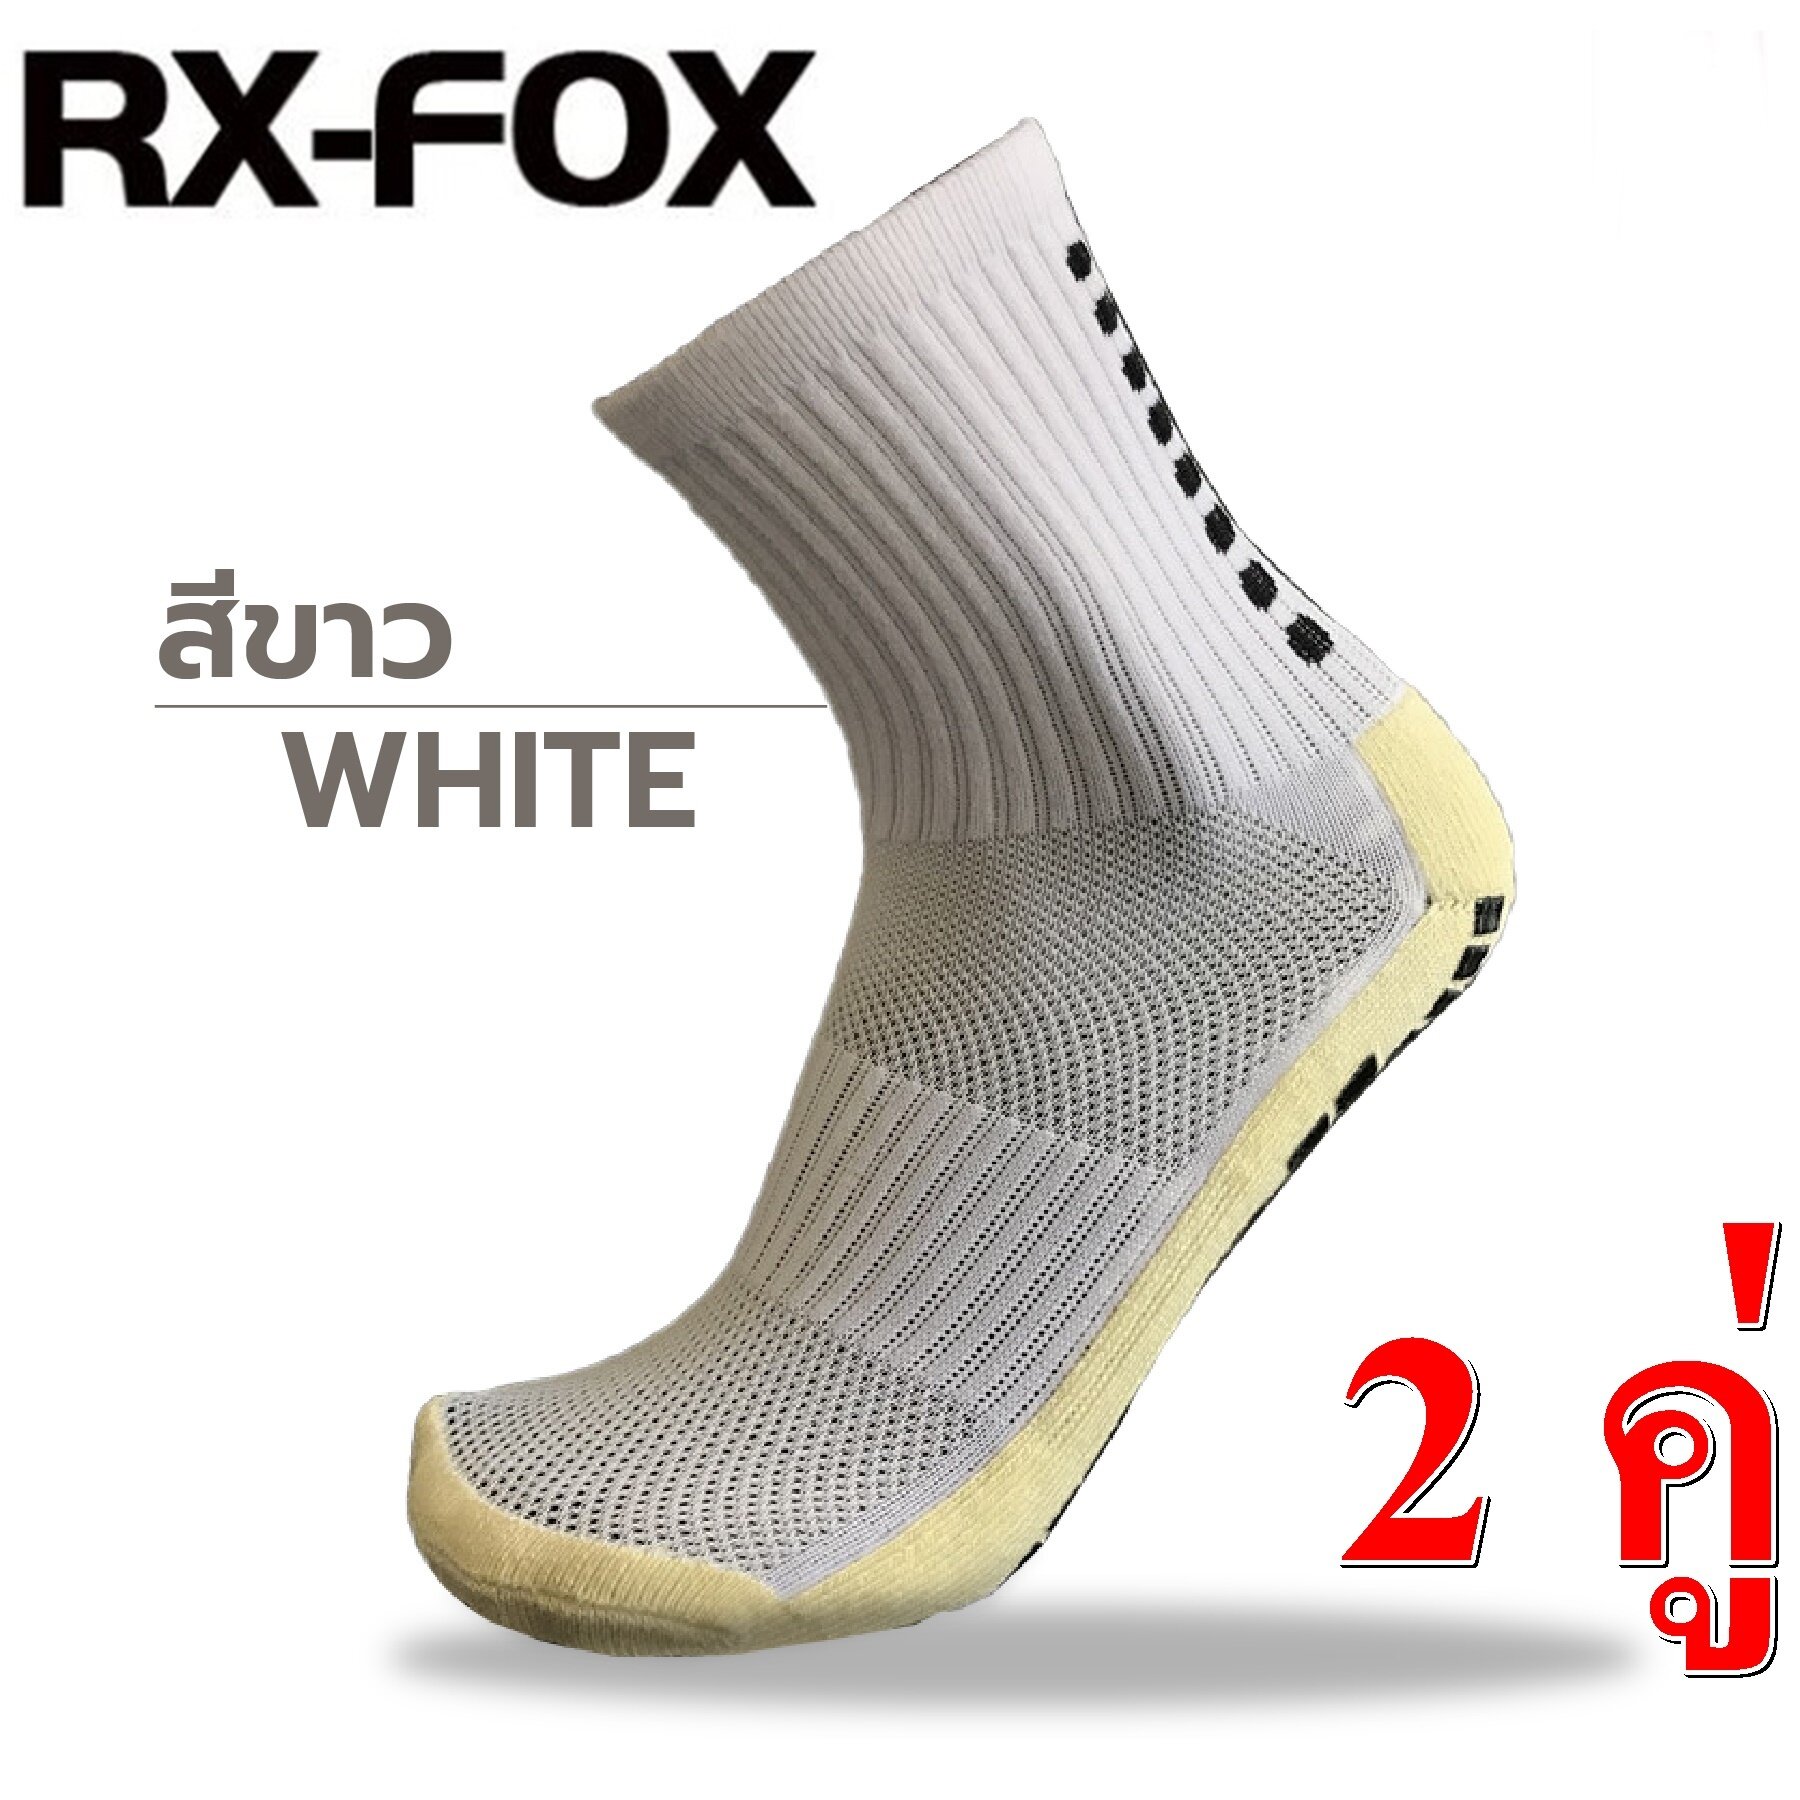 FOX socks ถุงเท้า ถุงเท้ากีฬา ถุงเท้ากันลื่น ถุงเท้าฟุตบอล ถุงเท้าวิ่ง ถุงเท้าข้อสั้น แบบสั้น แพ็คละ 2 คู่